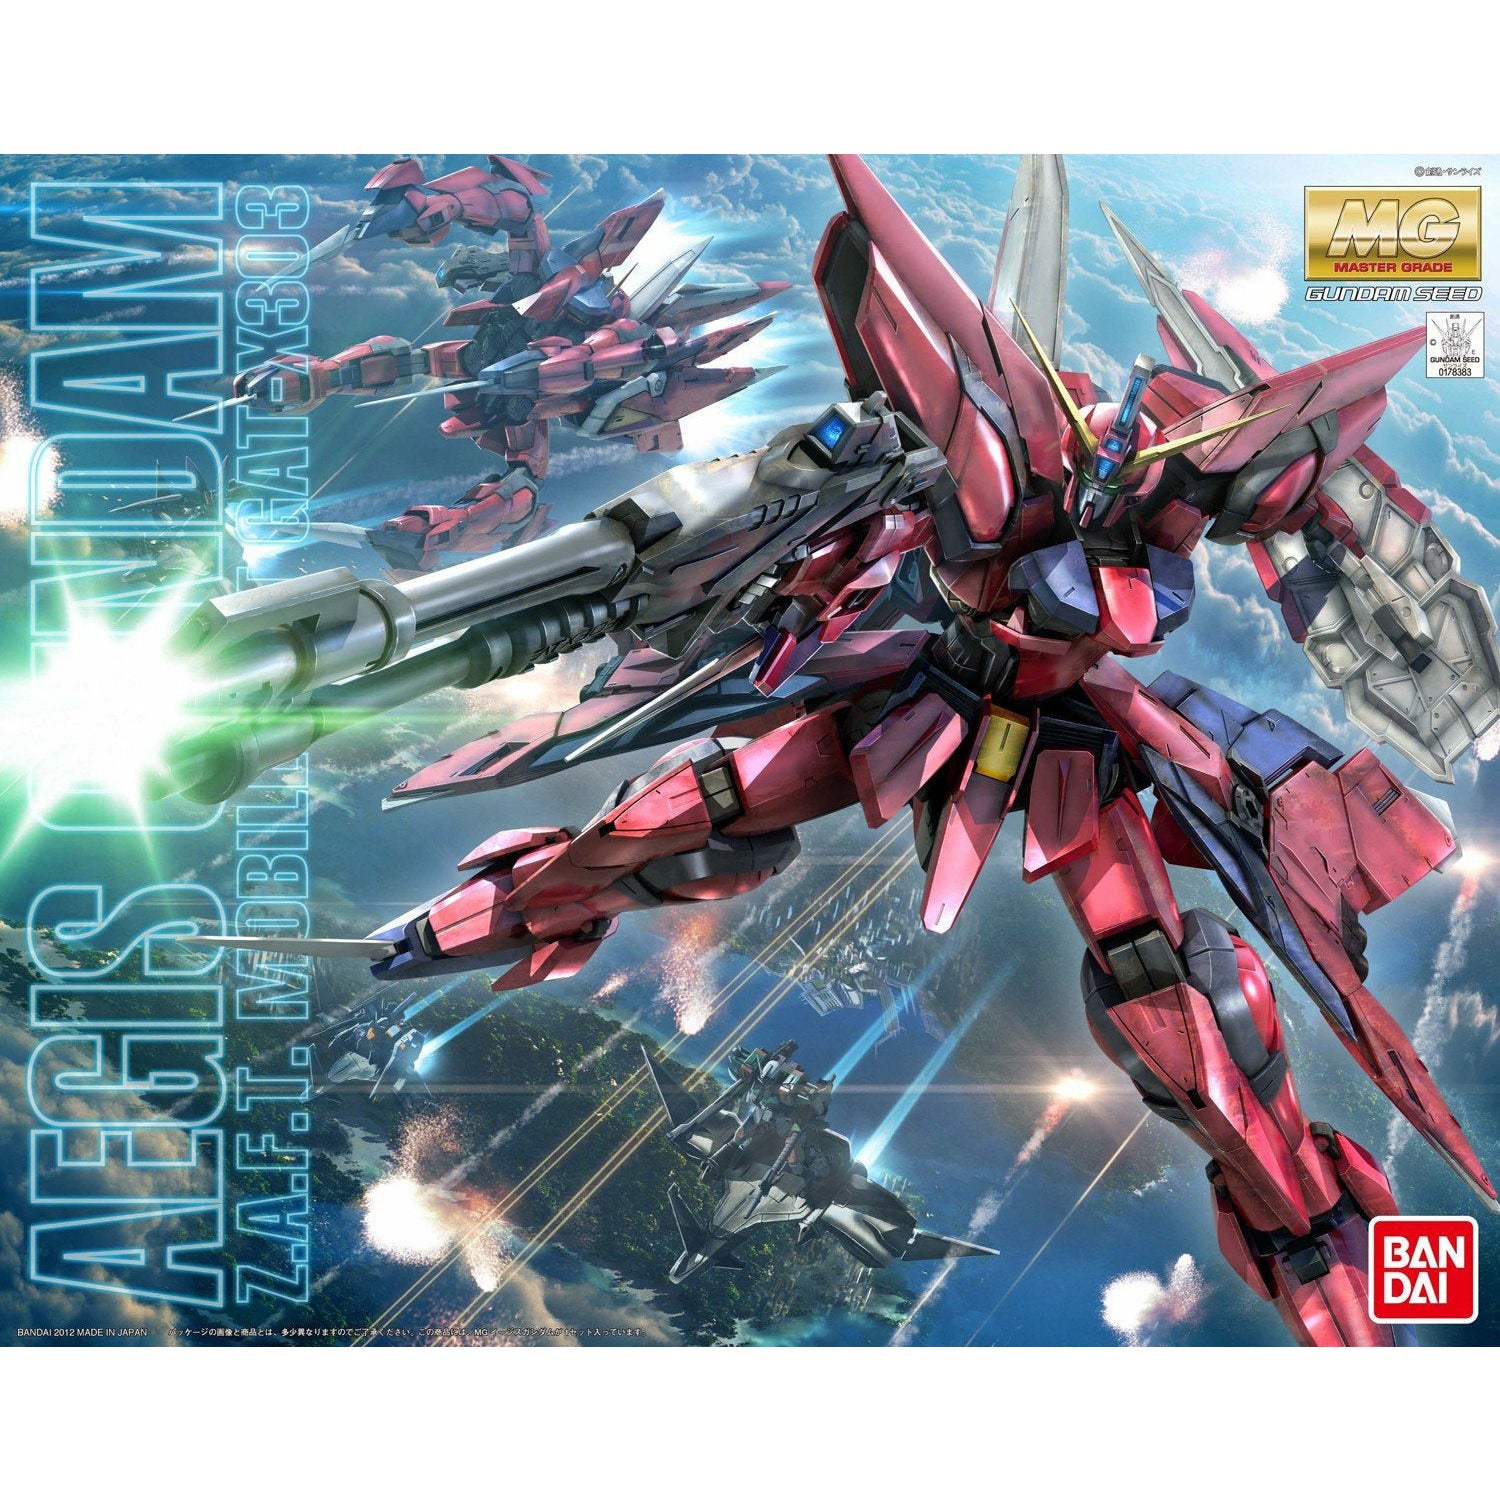 MG 1/100 GAT-X303 Aegis Gundam #5062907 by Bandai